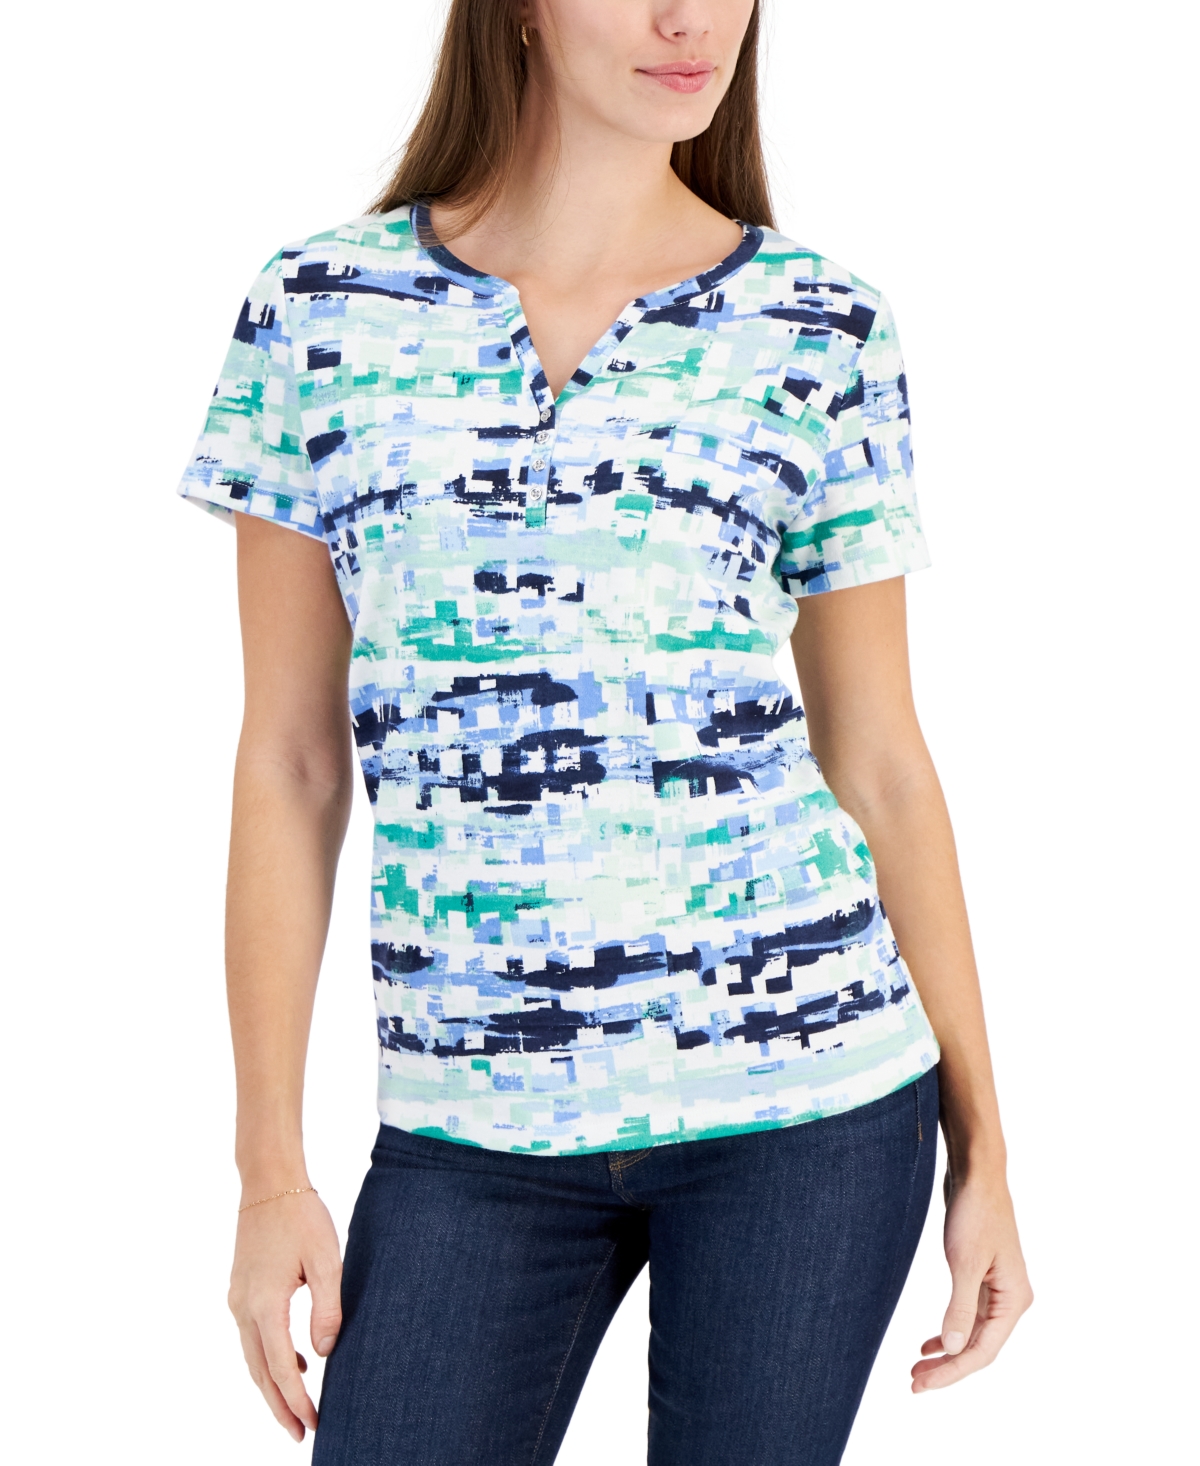 Women's Printed Short-Sleeve Henley Top, Created for Macy's - Aqua Ice